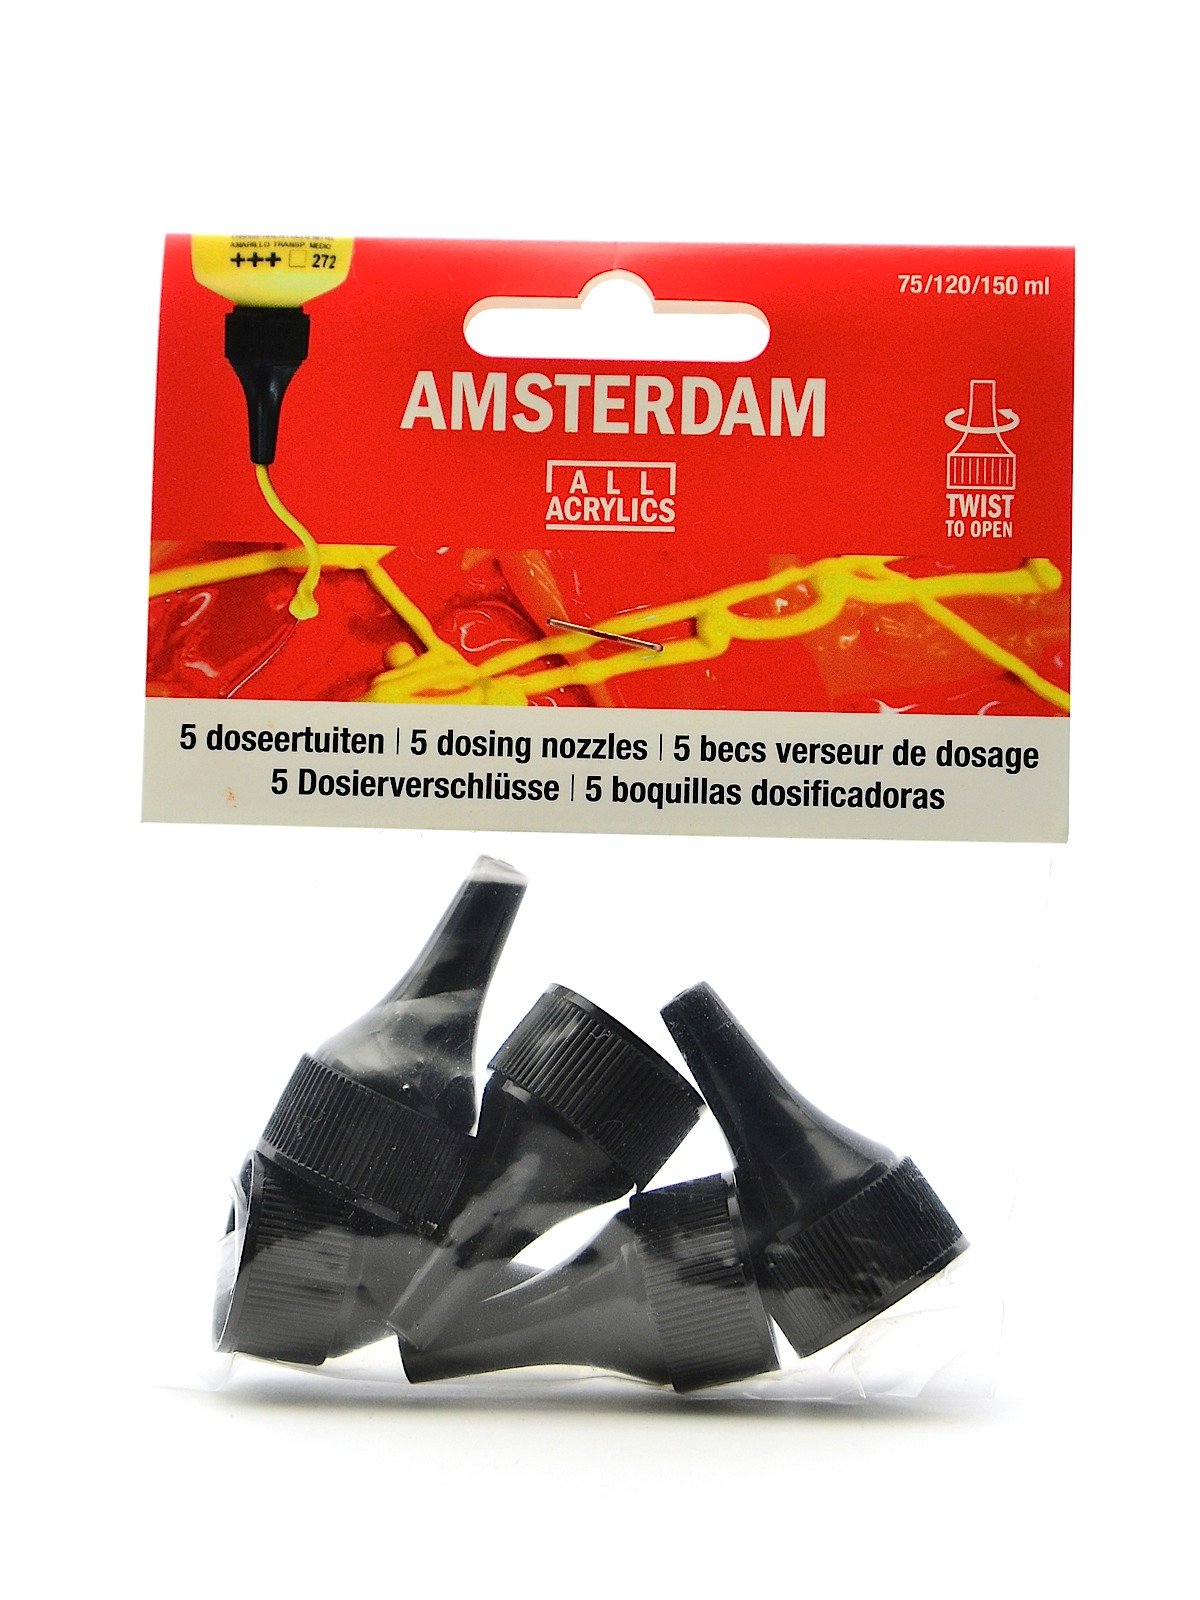 Amsterdam - Acrylic Dosing Nozzles